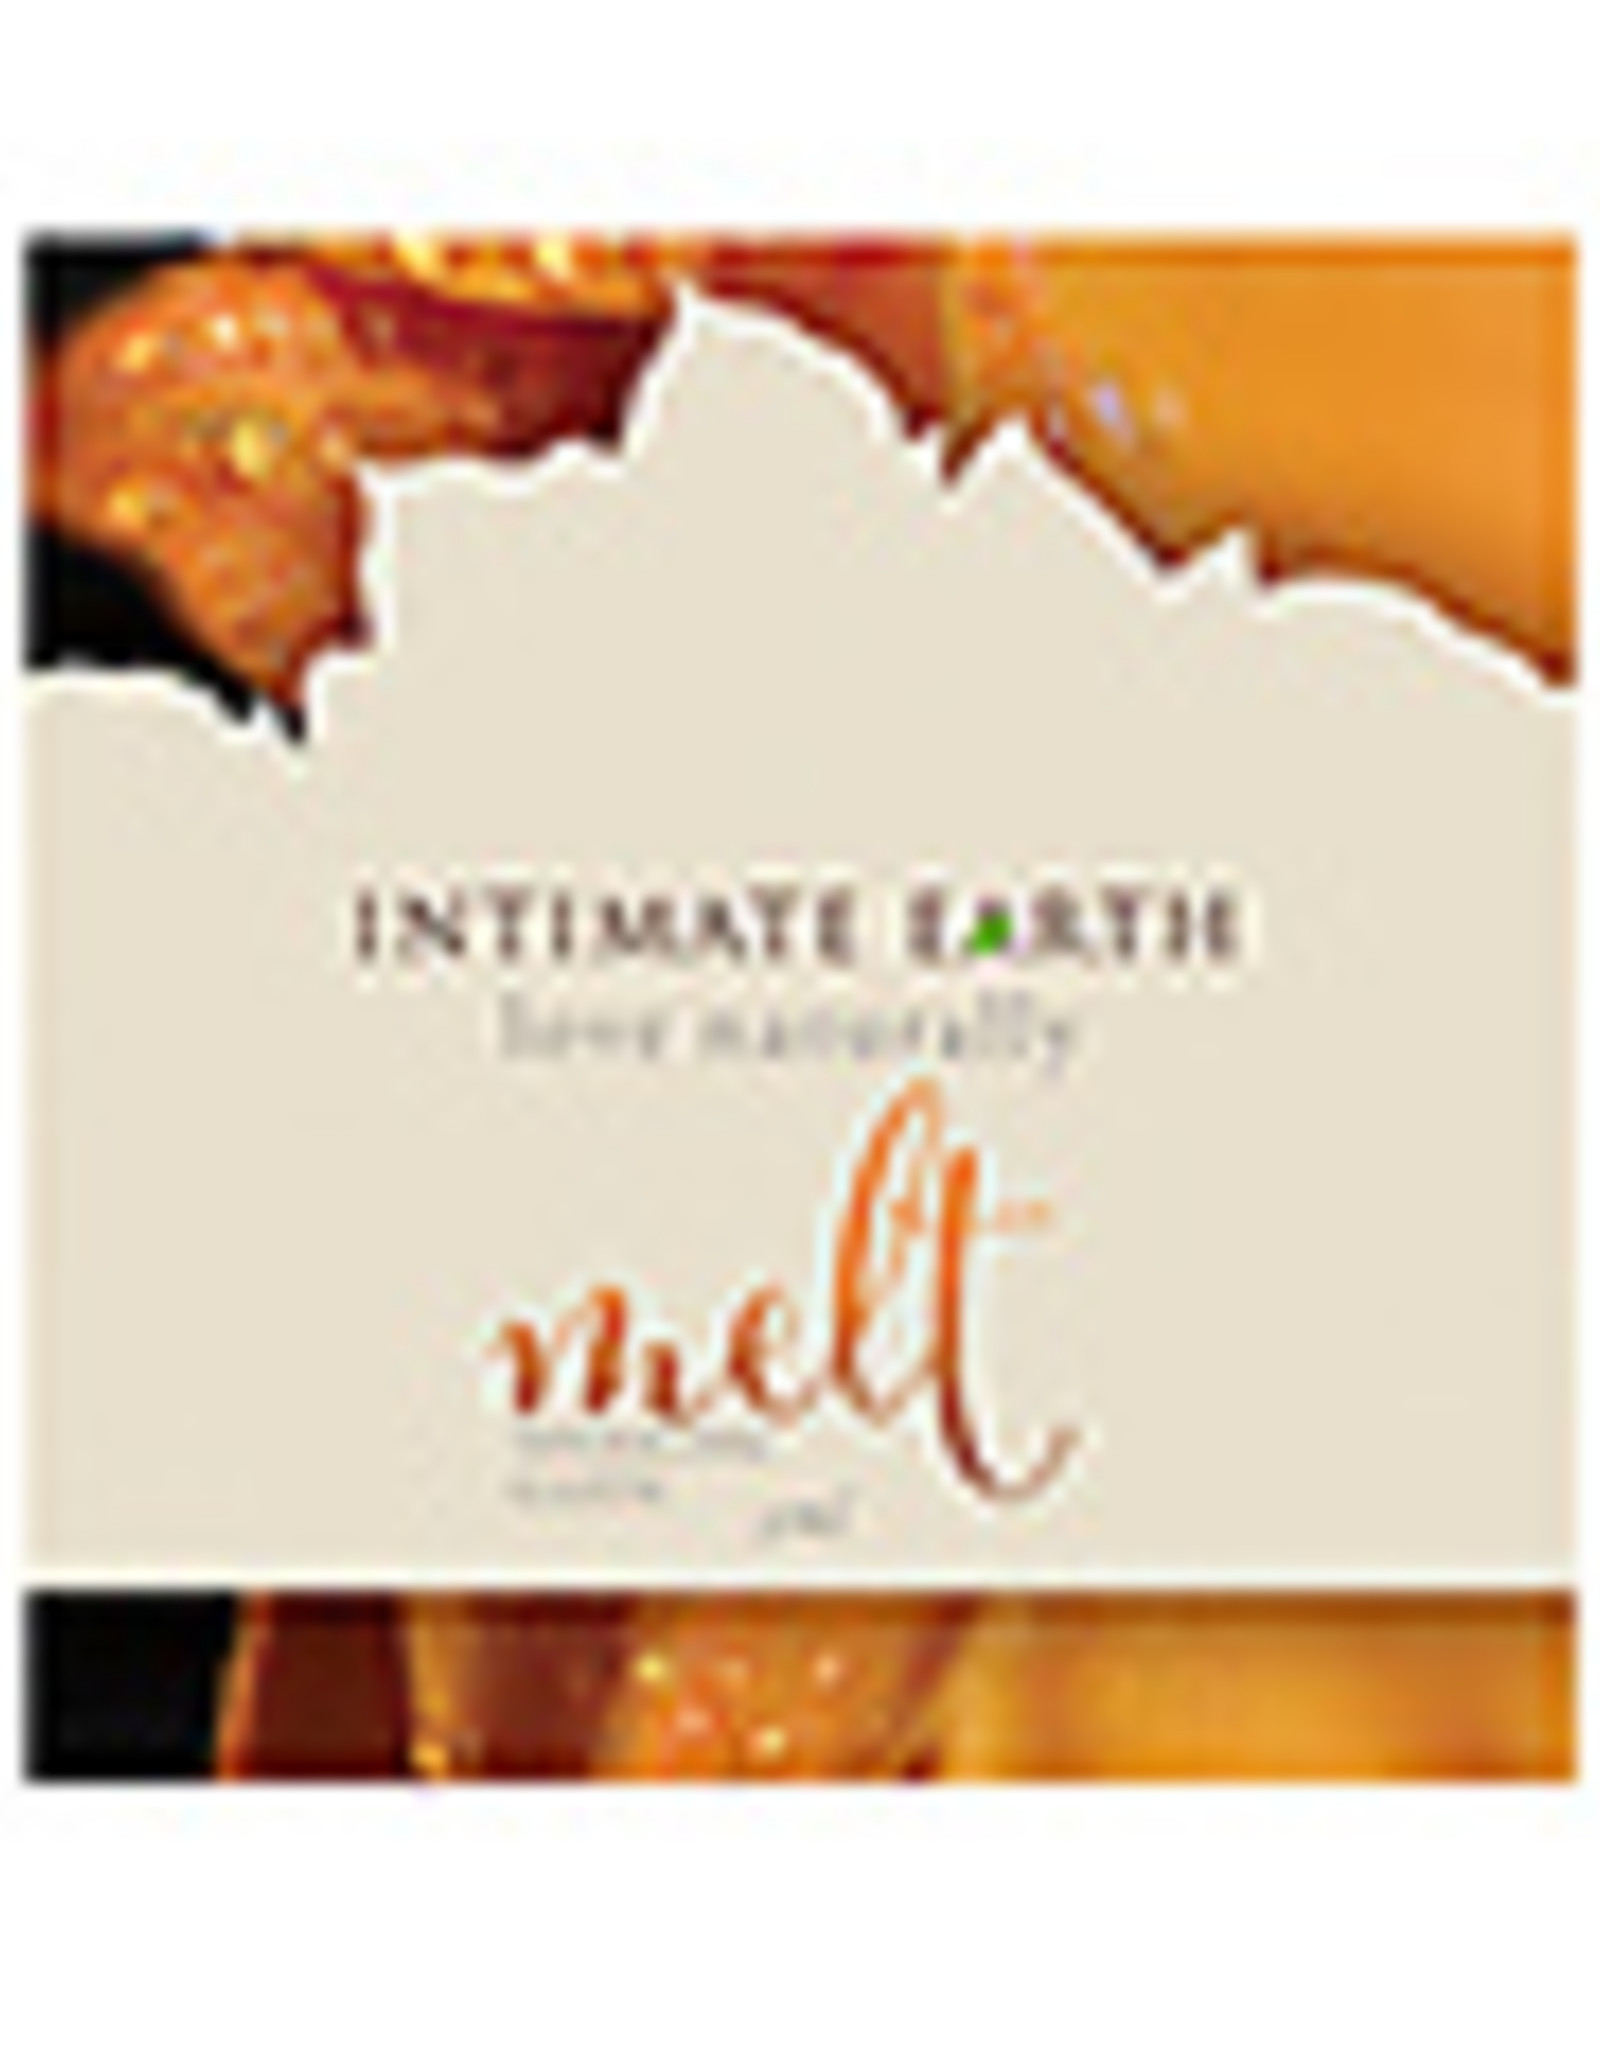 Intimate Earth Melt Warming Glide - 3 ml Foil